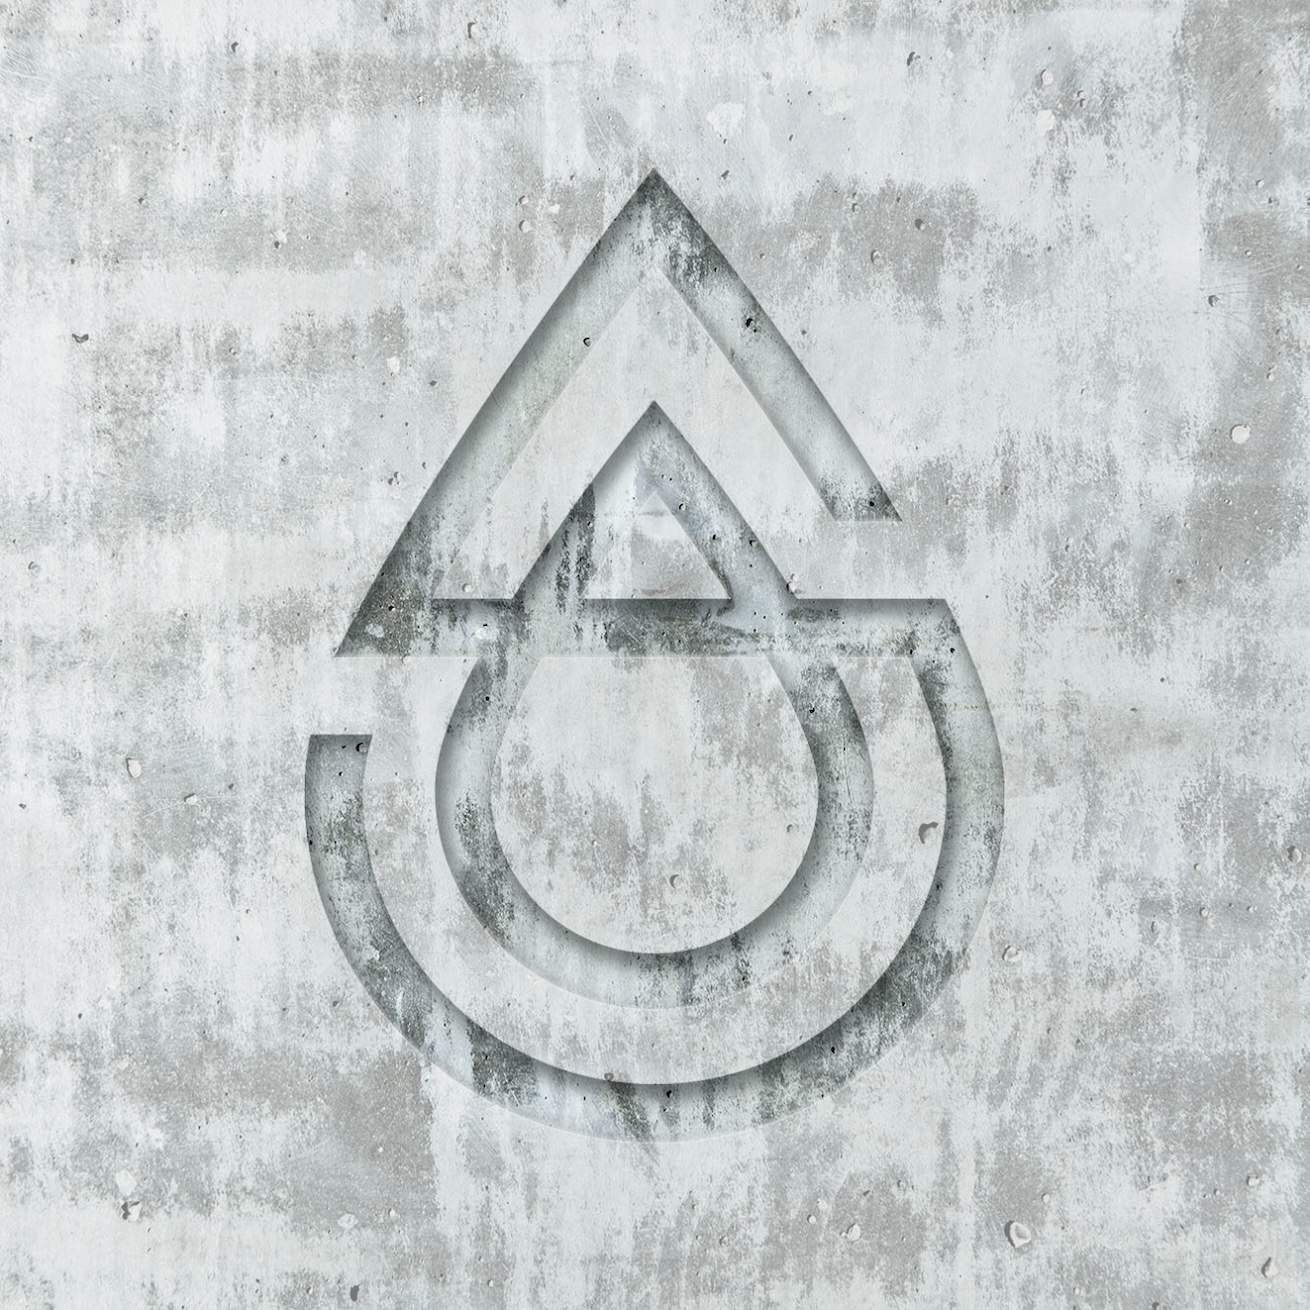 A water drop logo on a concrete wall.